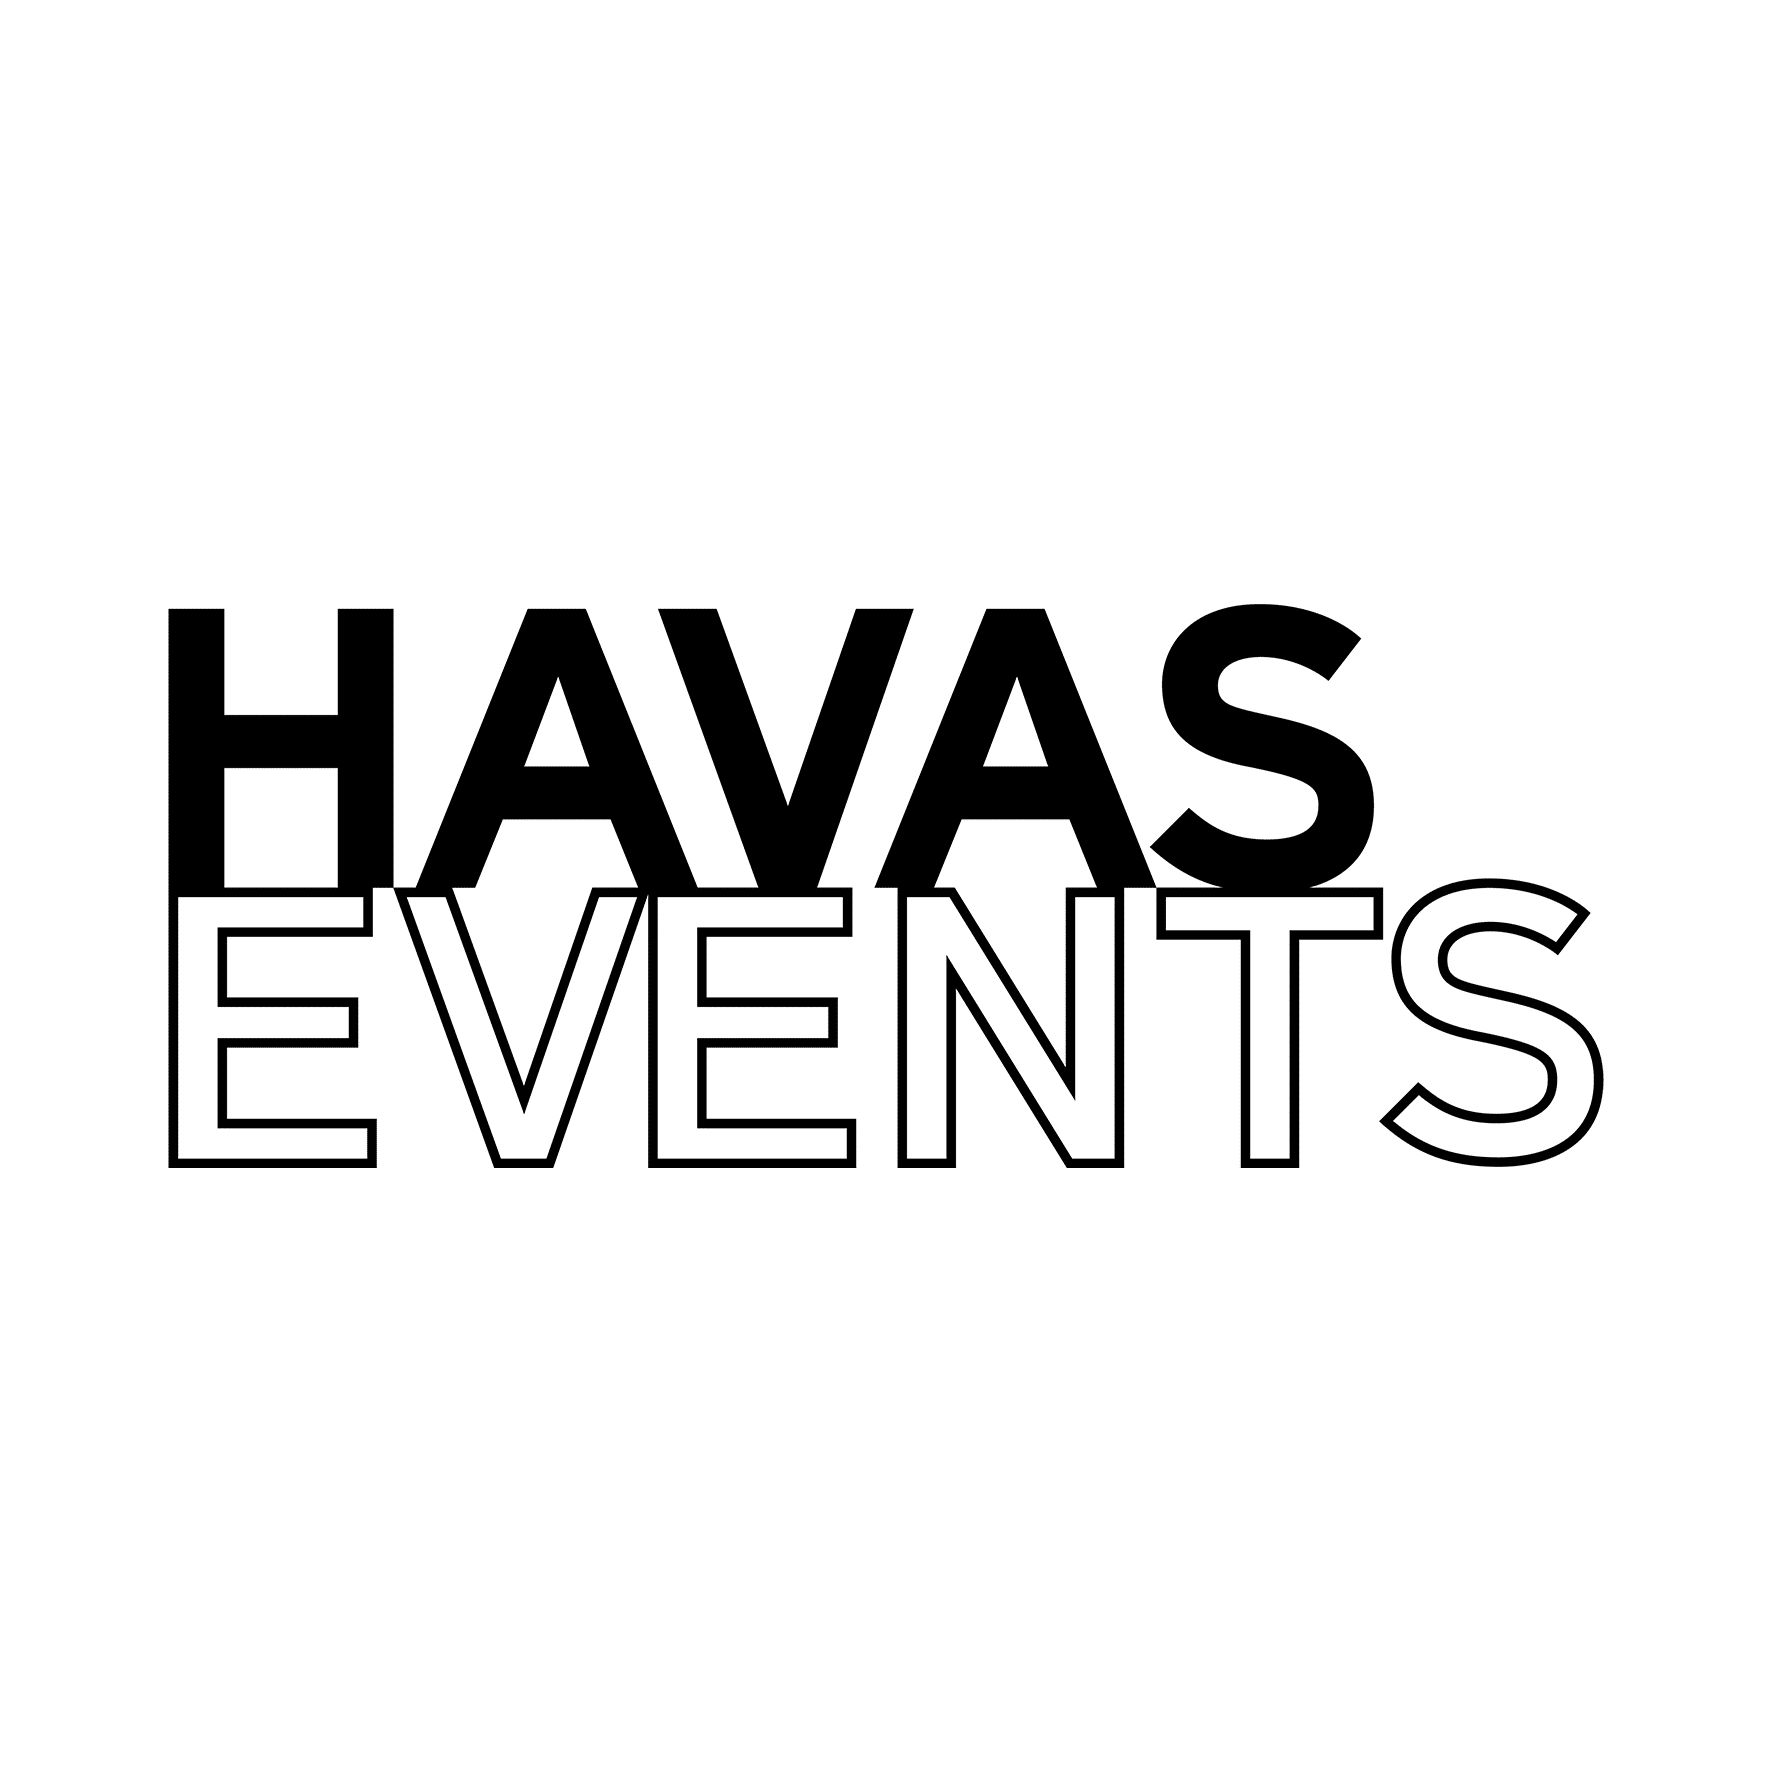 HAVAS EVENTS